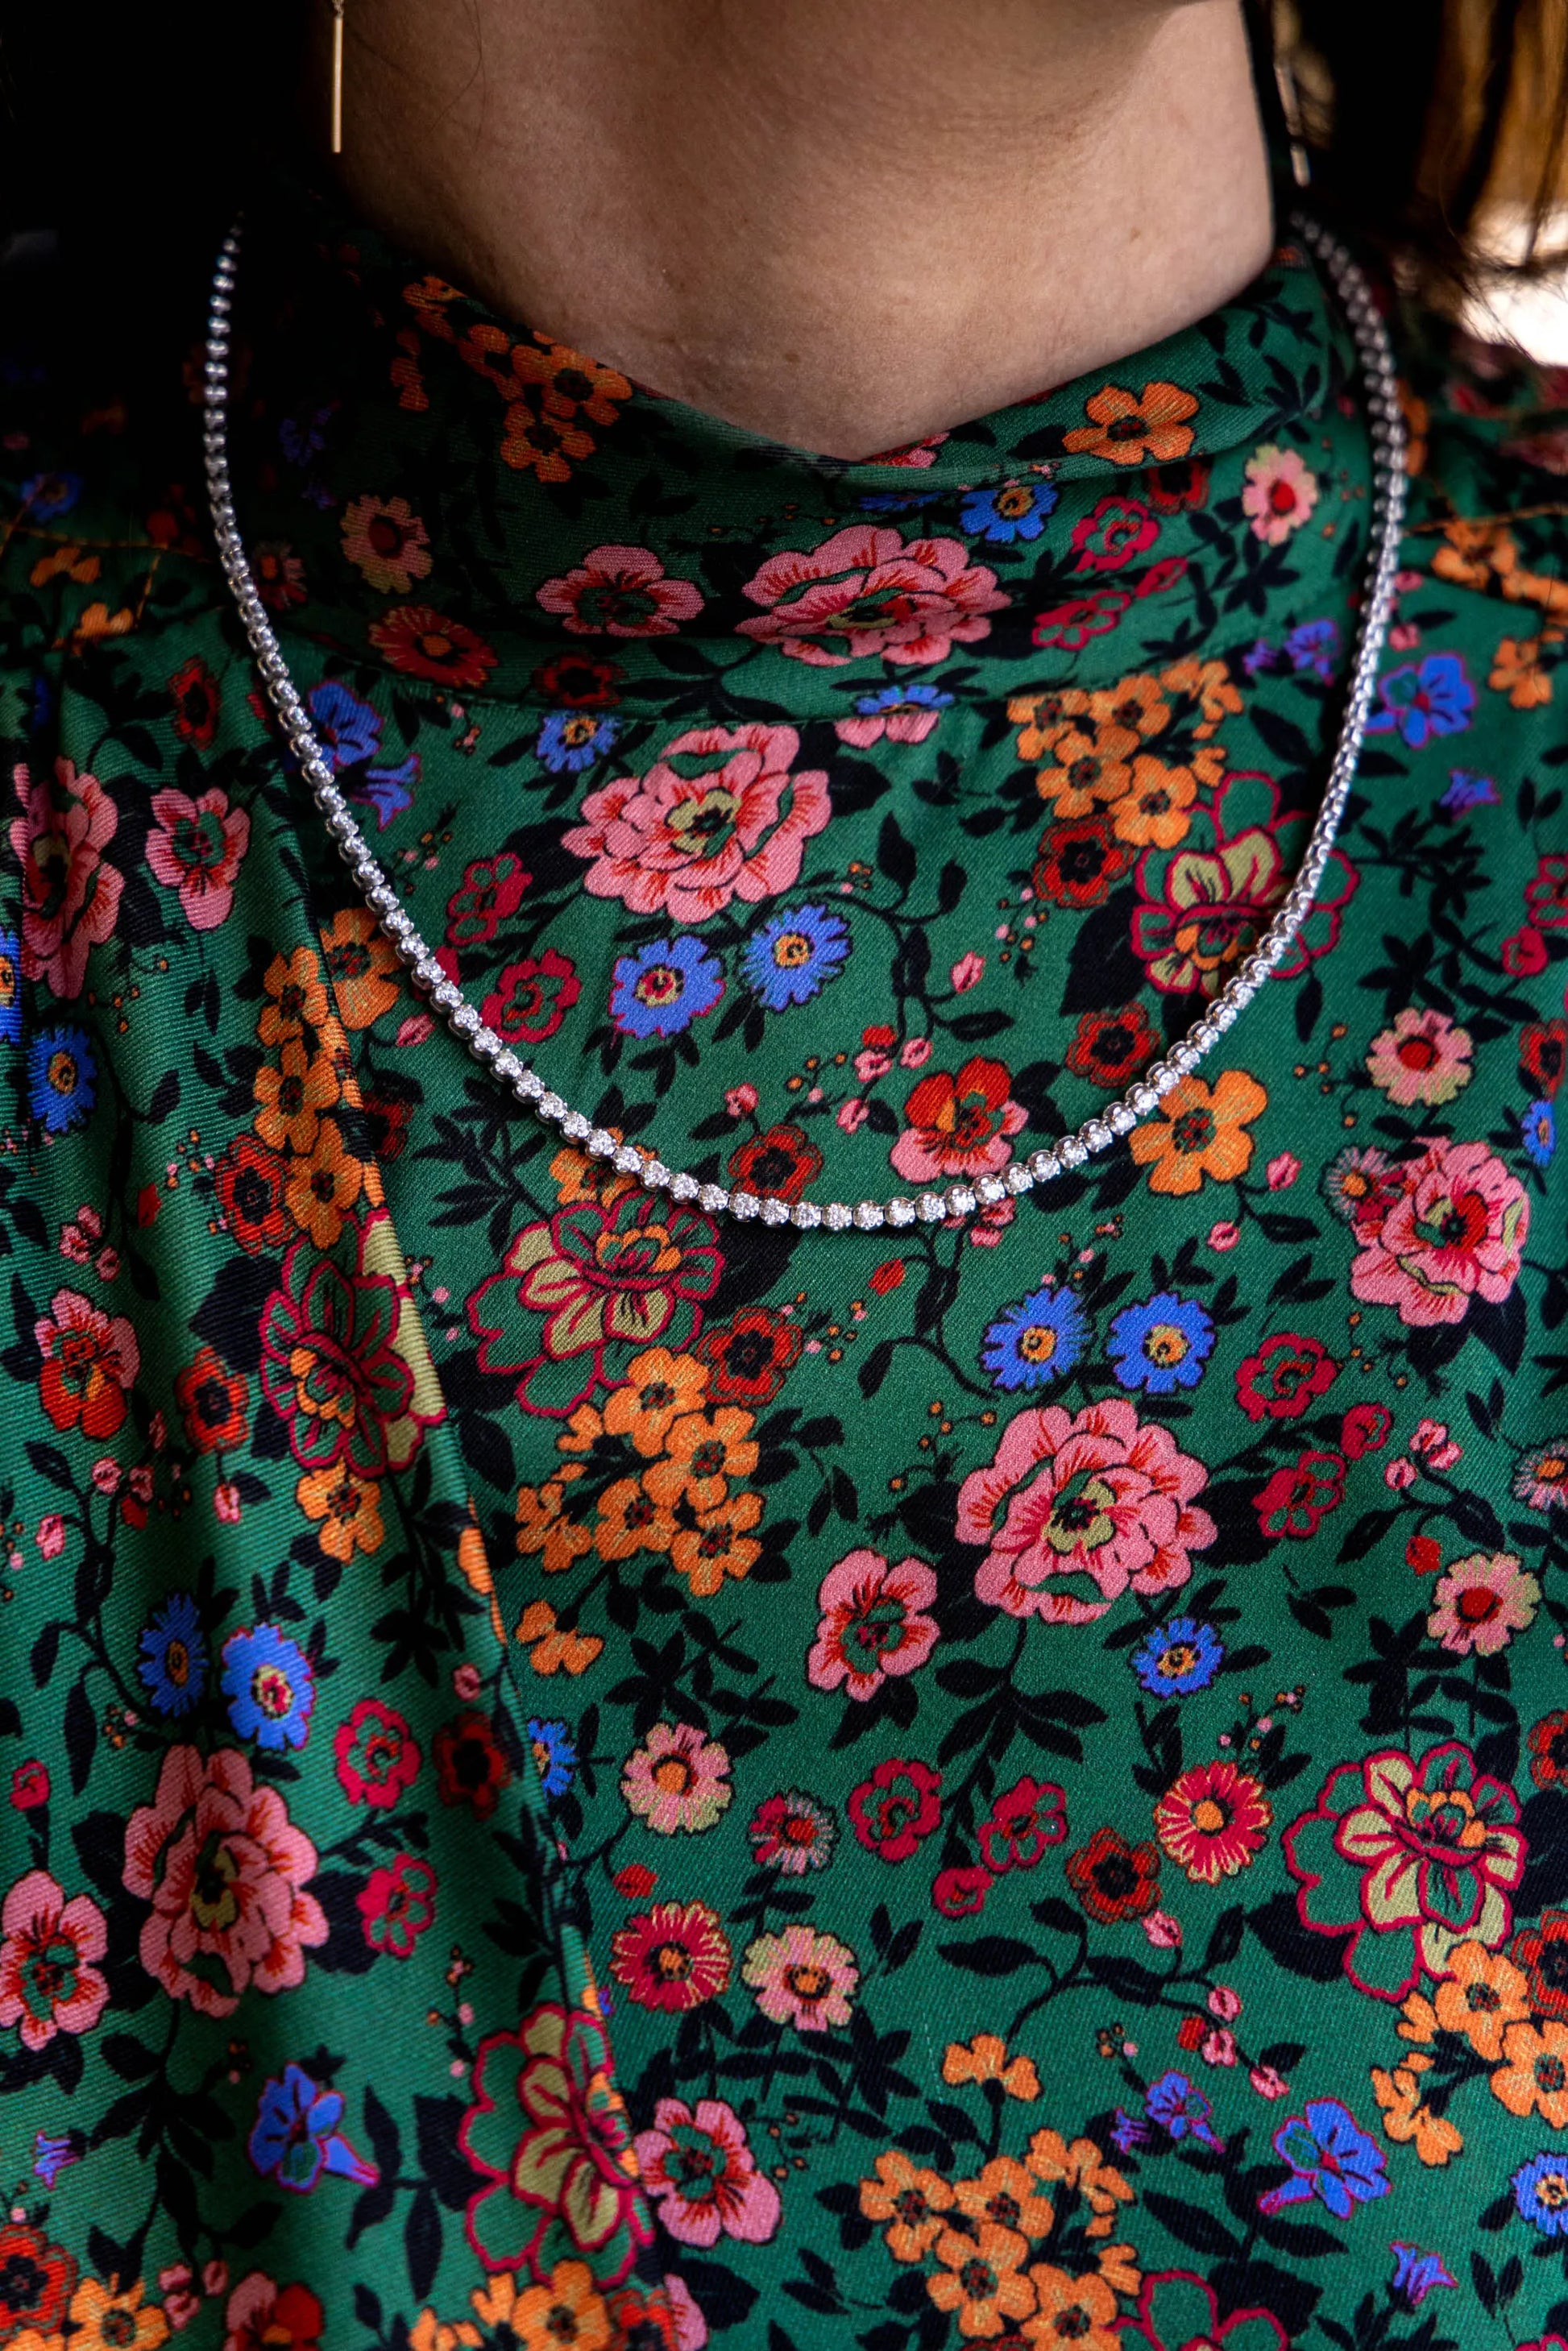 Diamond Tennis Necklace - Squash Blossom Vail